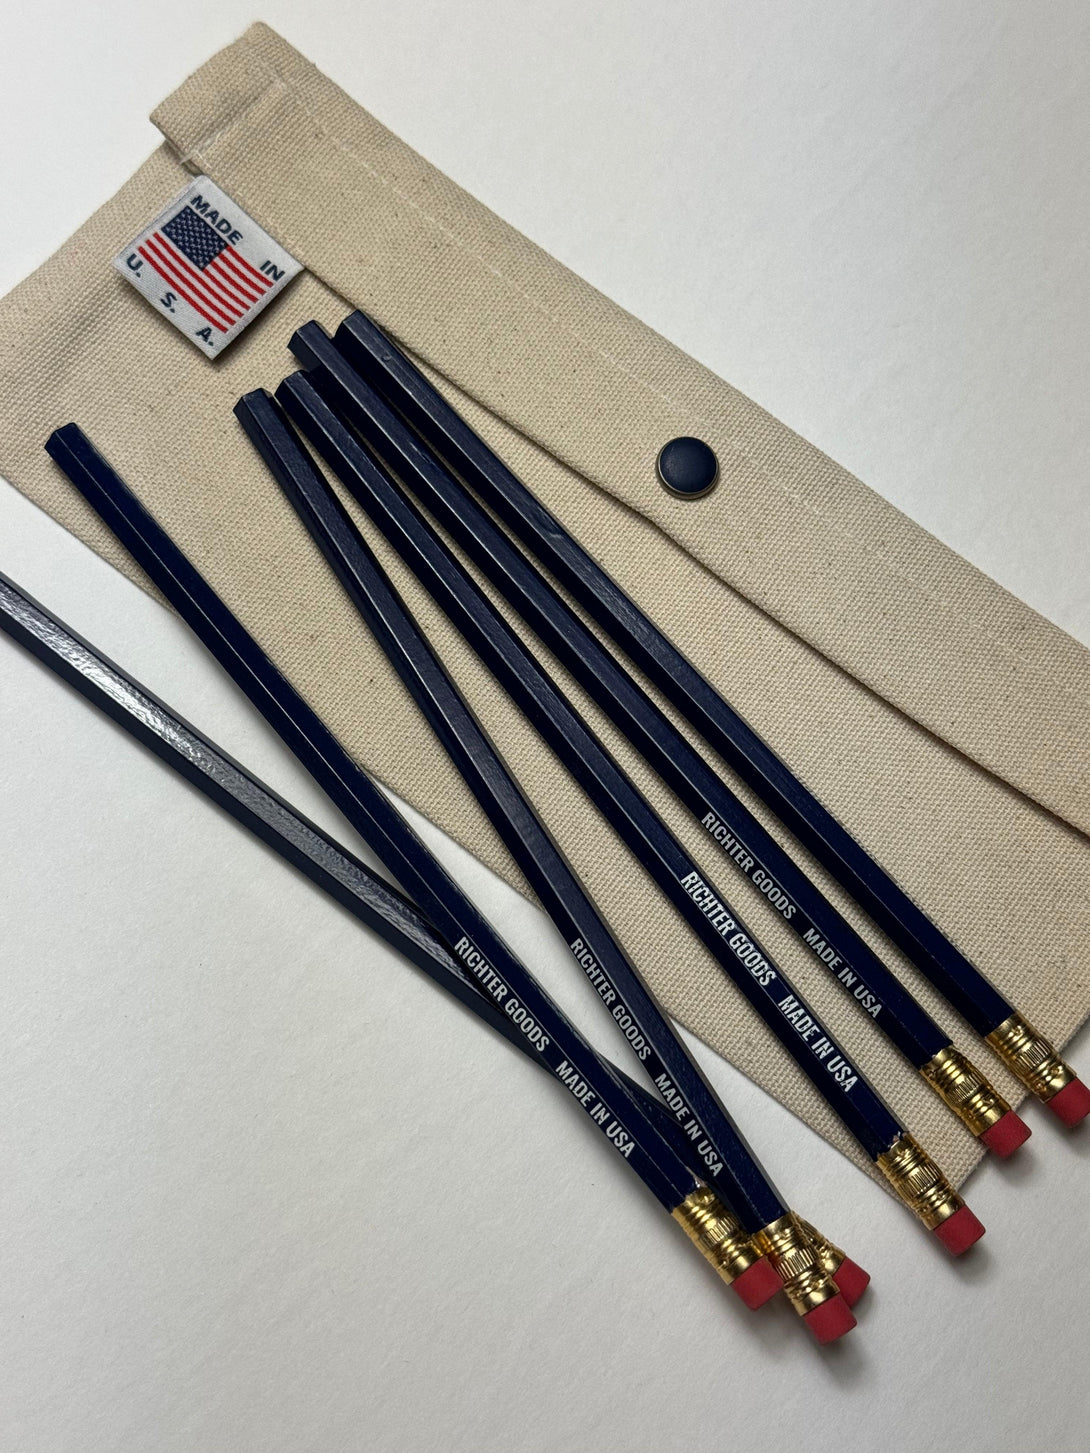 Duck Canvas Pencil Bag with Six Pencils - Richter Goods